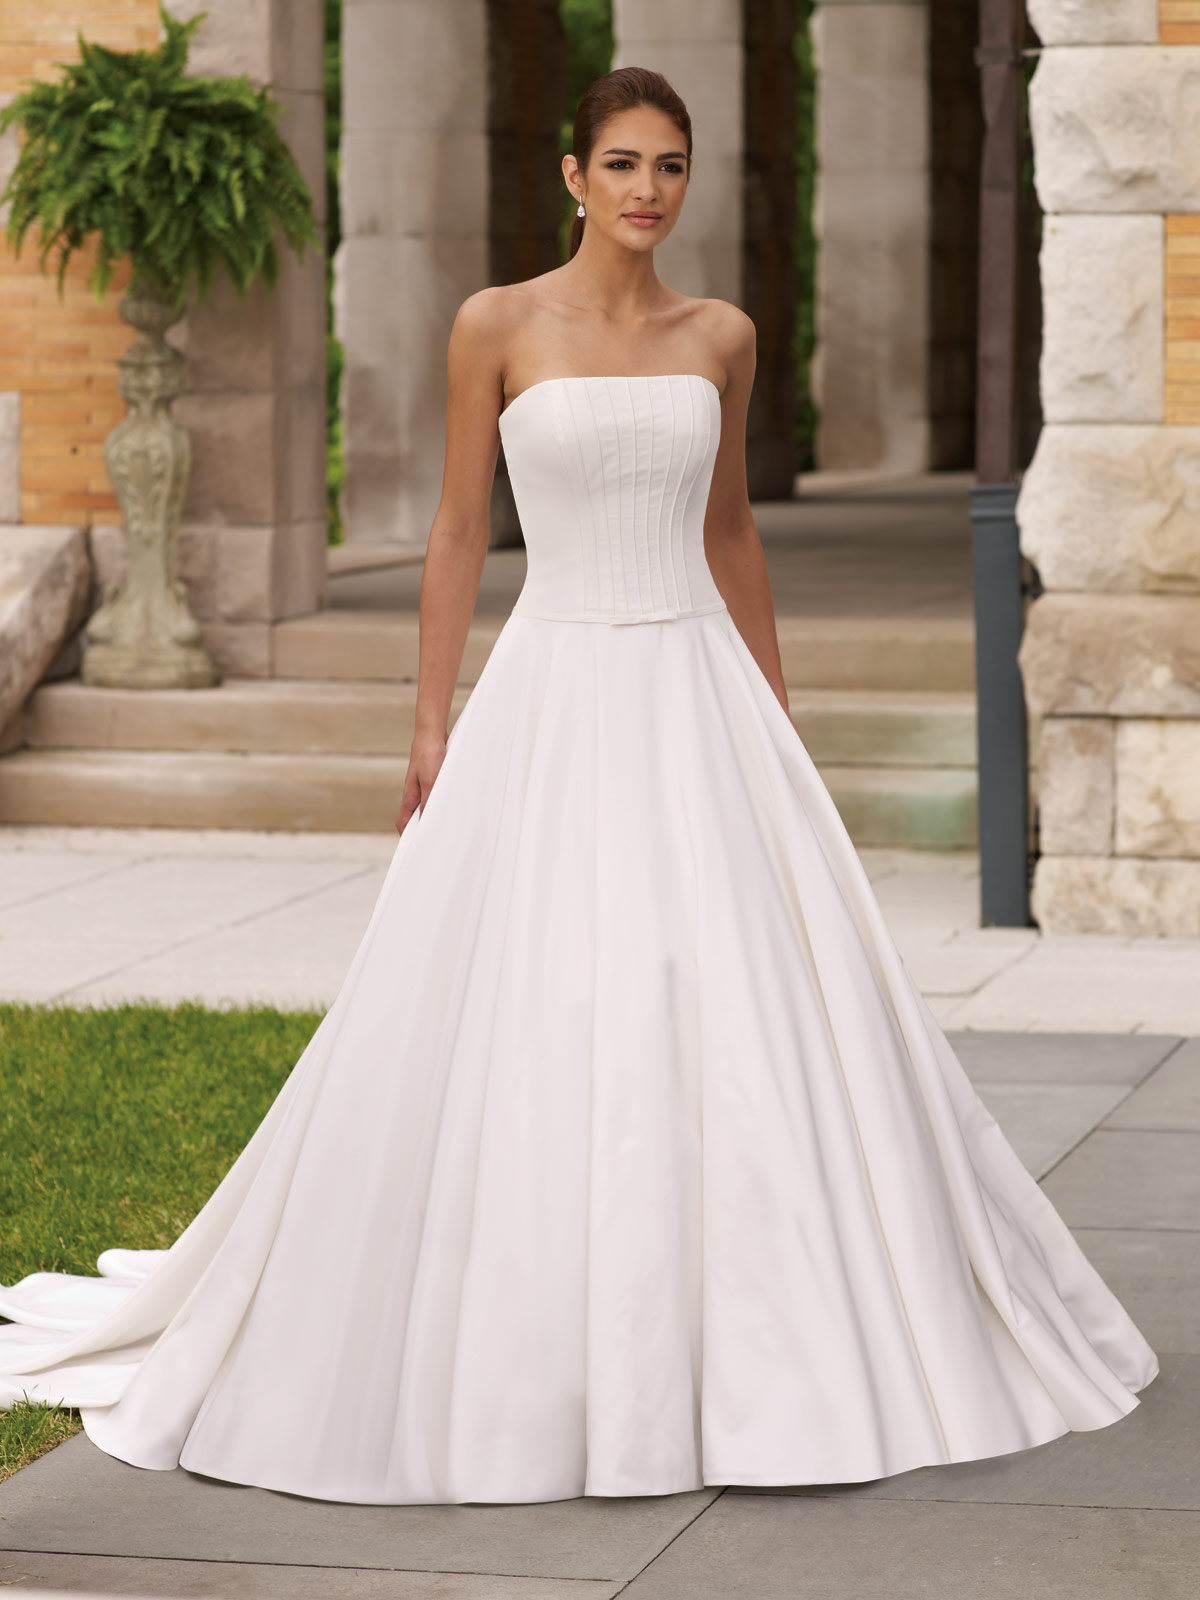 Example Formal Photos Design Choices Wedding Gowns | Photos Wedding Dresses